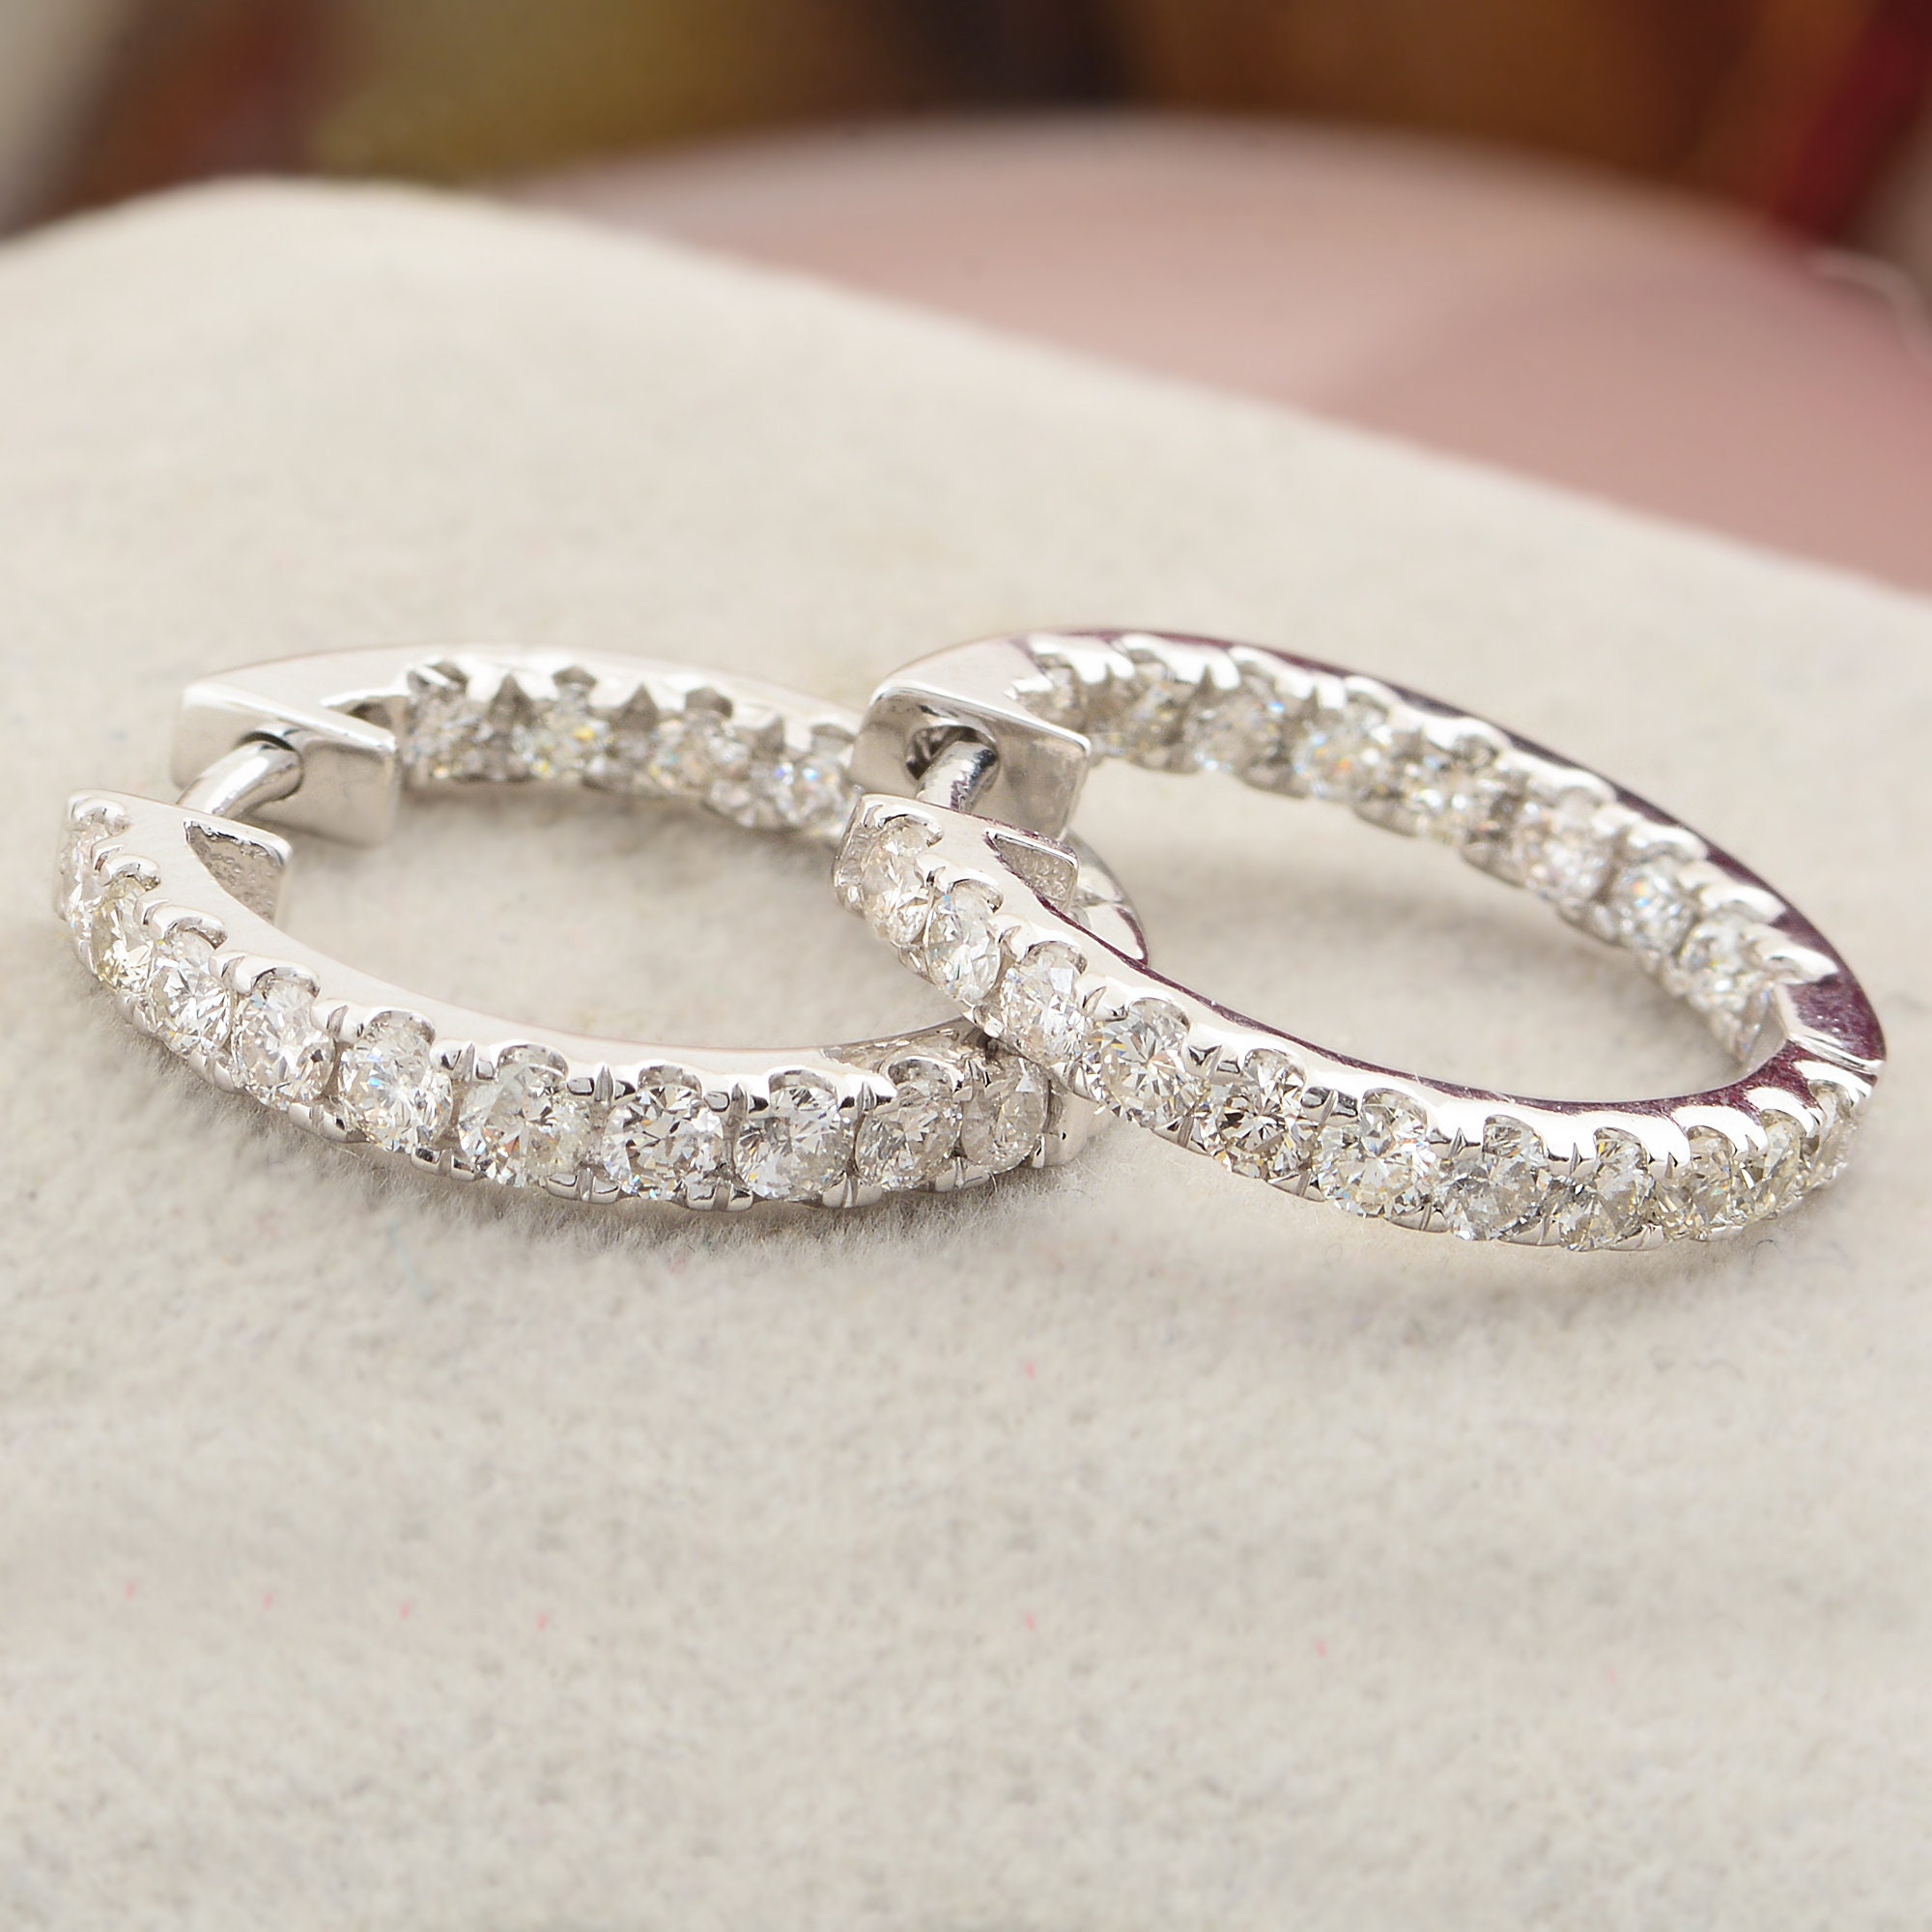 1.6 Ct Diamond Hoop Earrings, Women Huggies in 10K White Gold Si/Hi Diamonds, Gift For Mom, Her